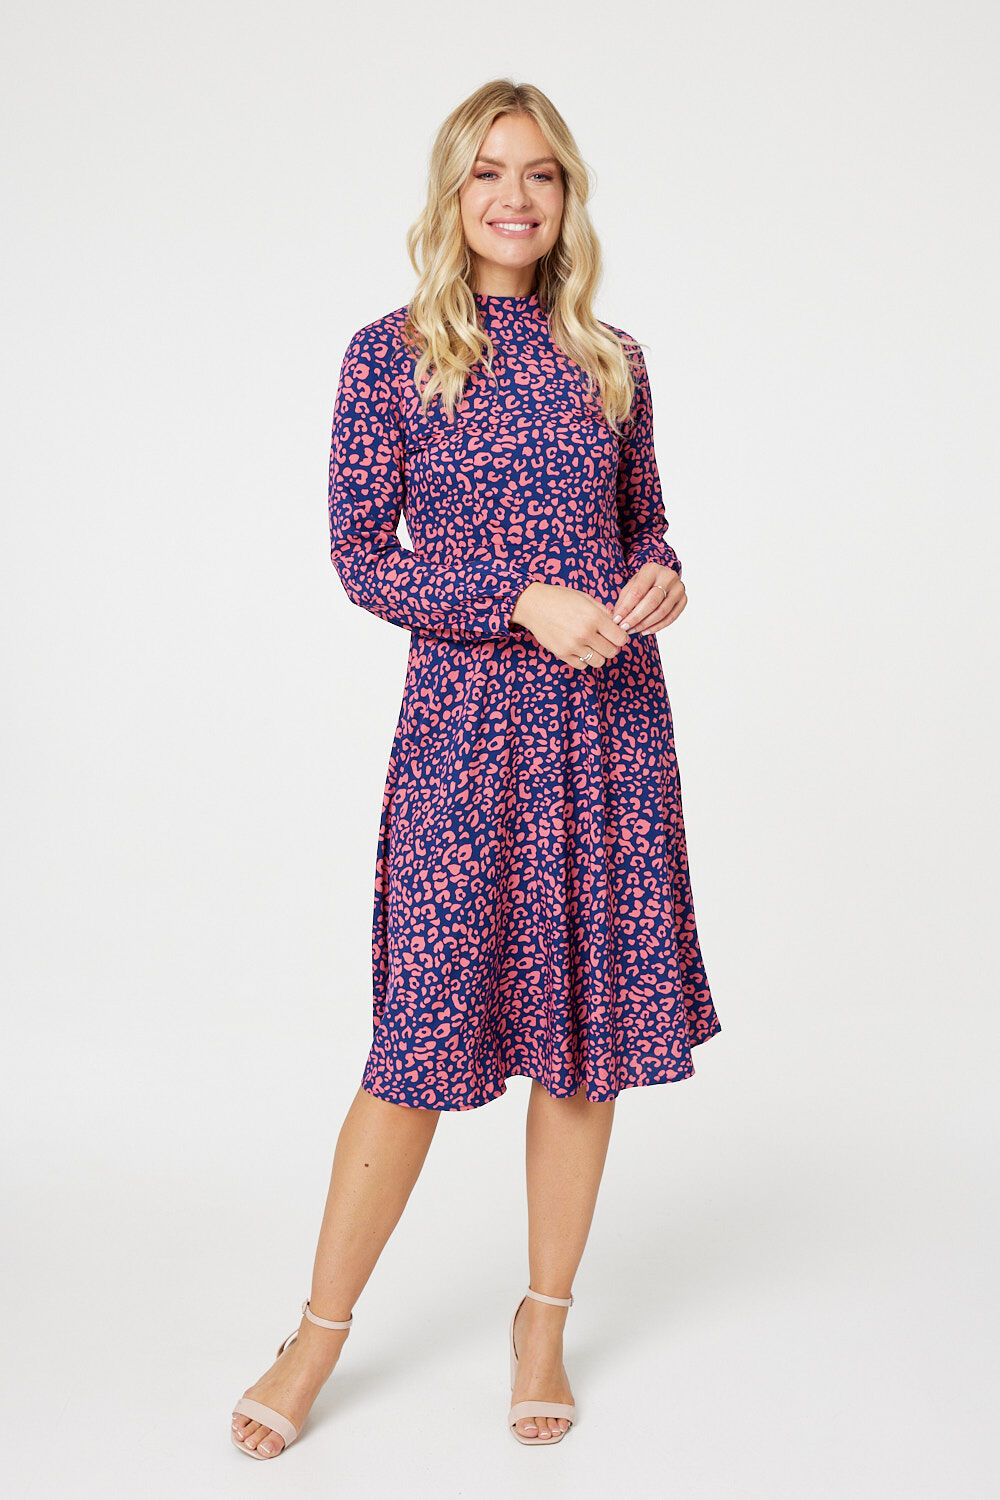 Izabel London Women’s Blue Leopard Print Stylish High Neck Tea Dress, Size: 18